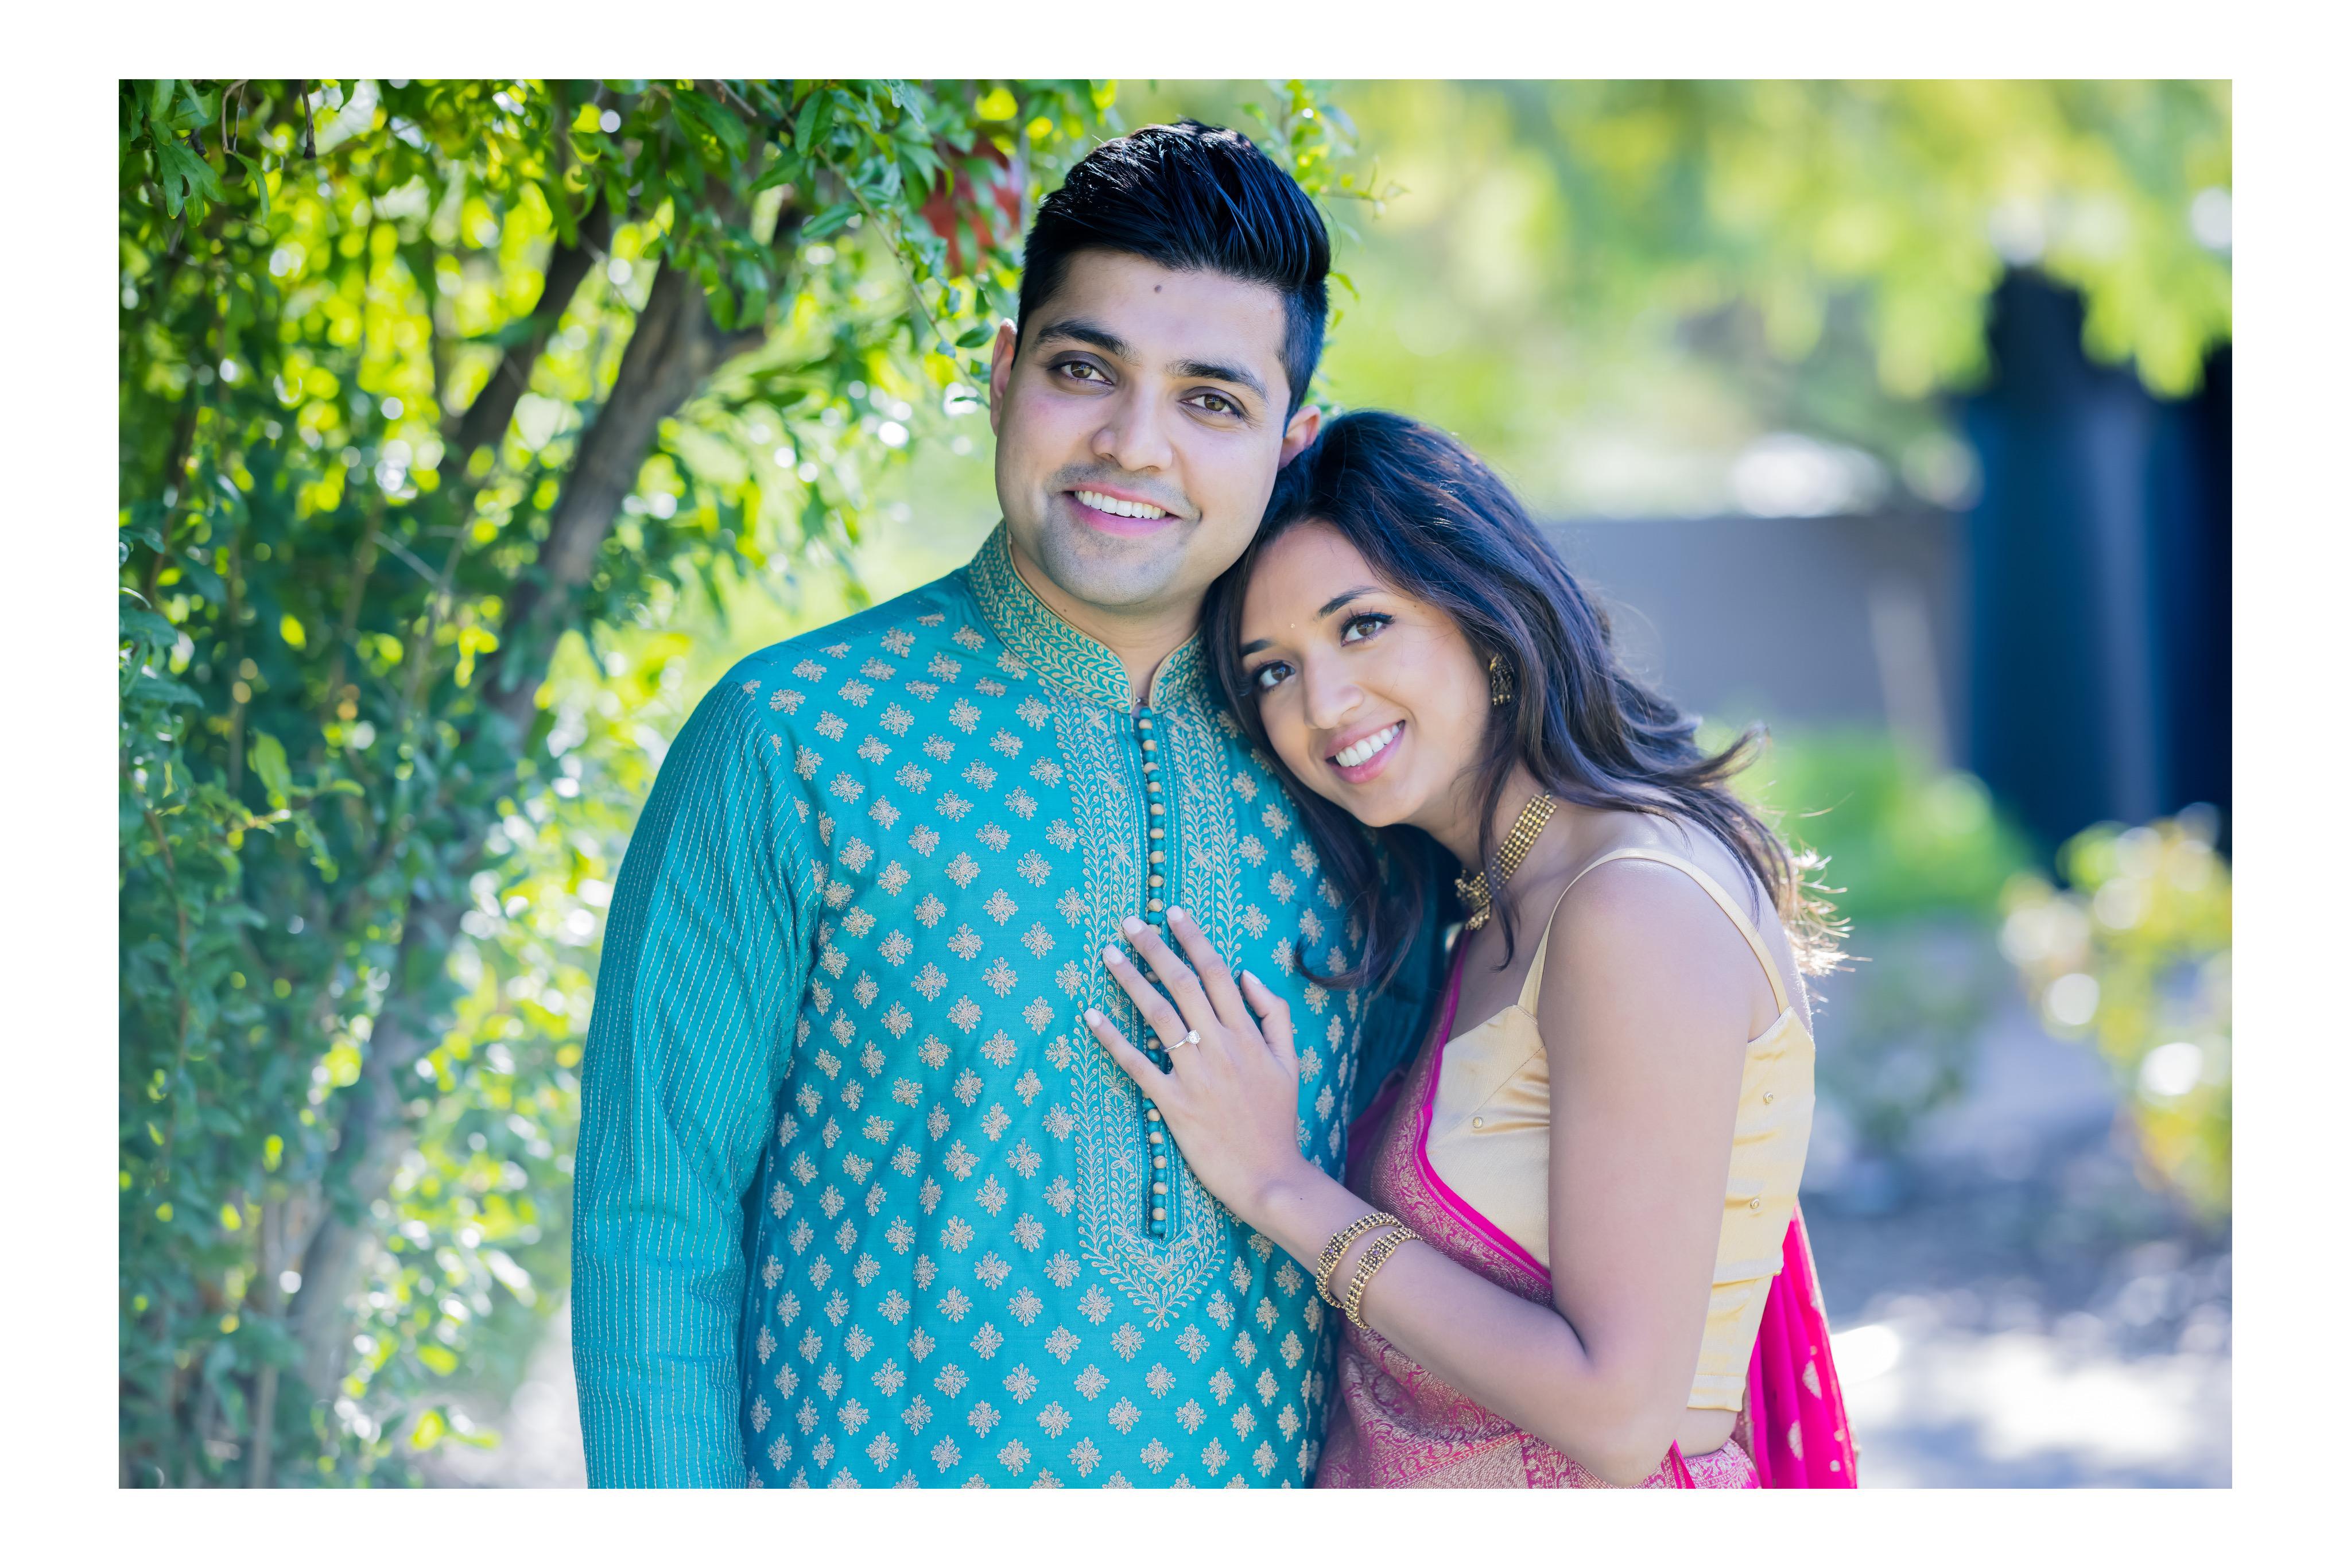 The Wedding Website of Yash Patel and Anika Gupta